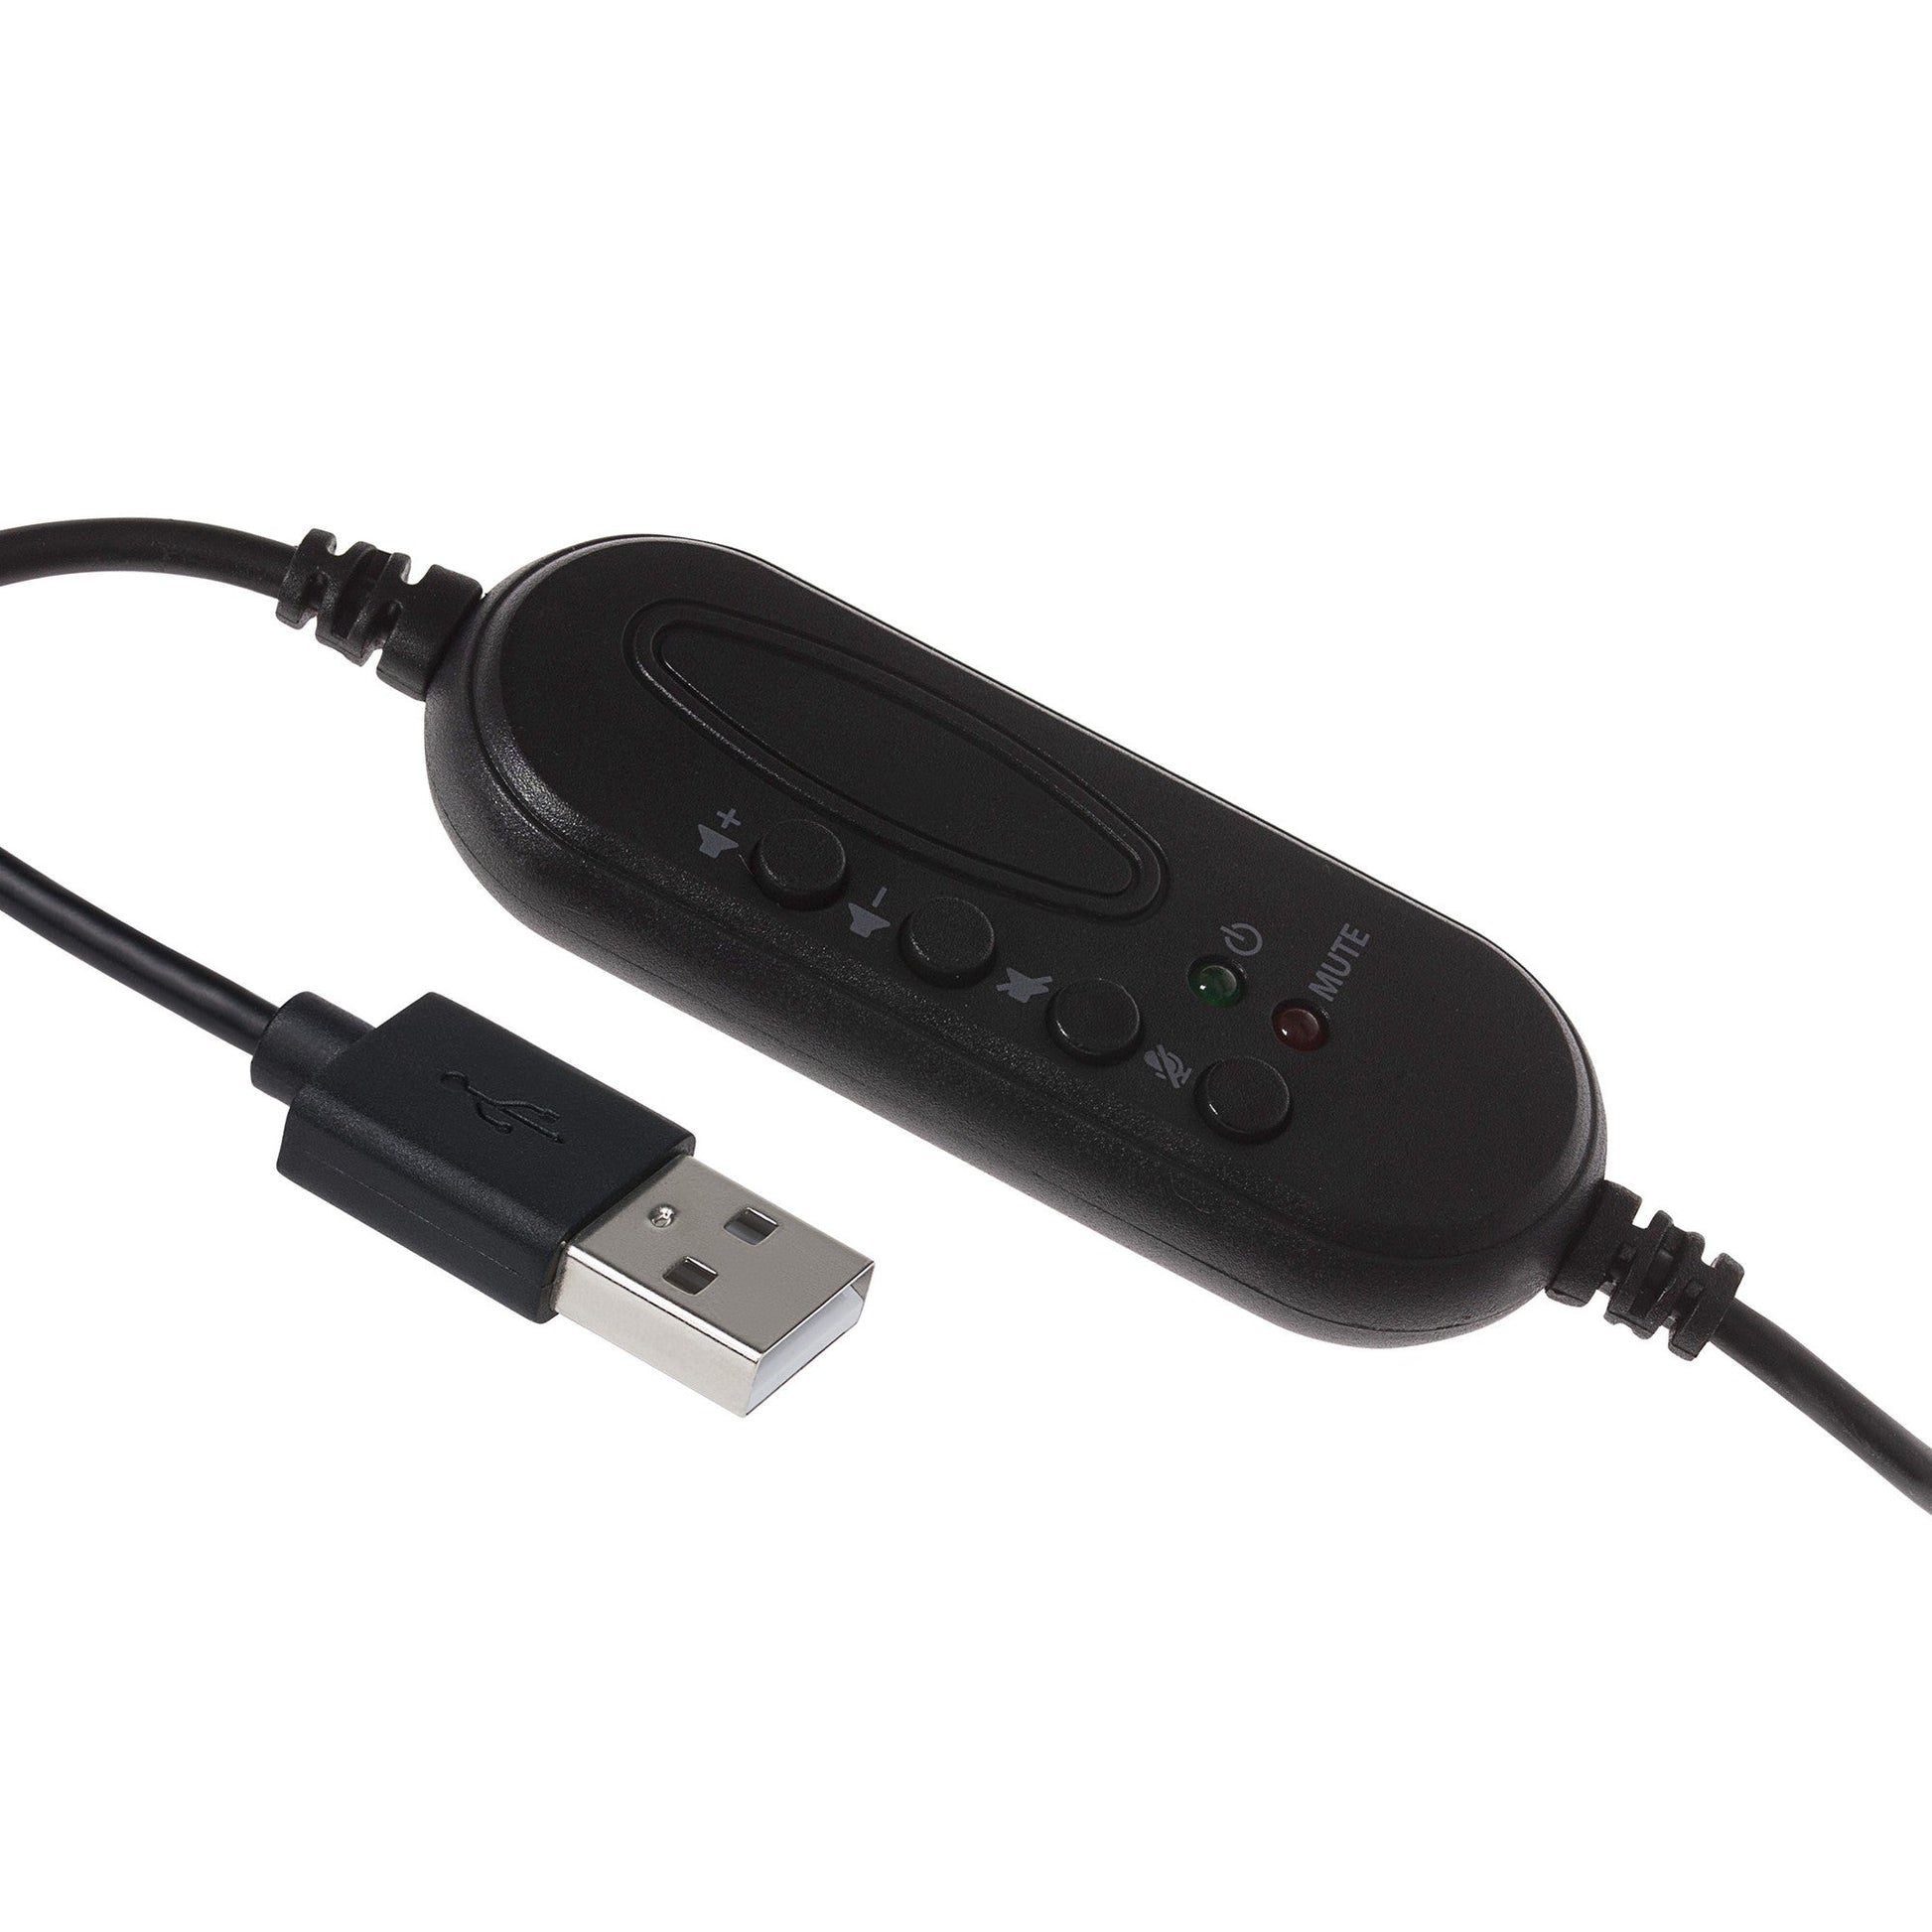 ProSound Single Ear Mono USB-A Headset Boom Microphone Noise Cancellation - maplin.co.uk